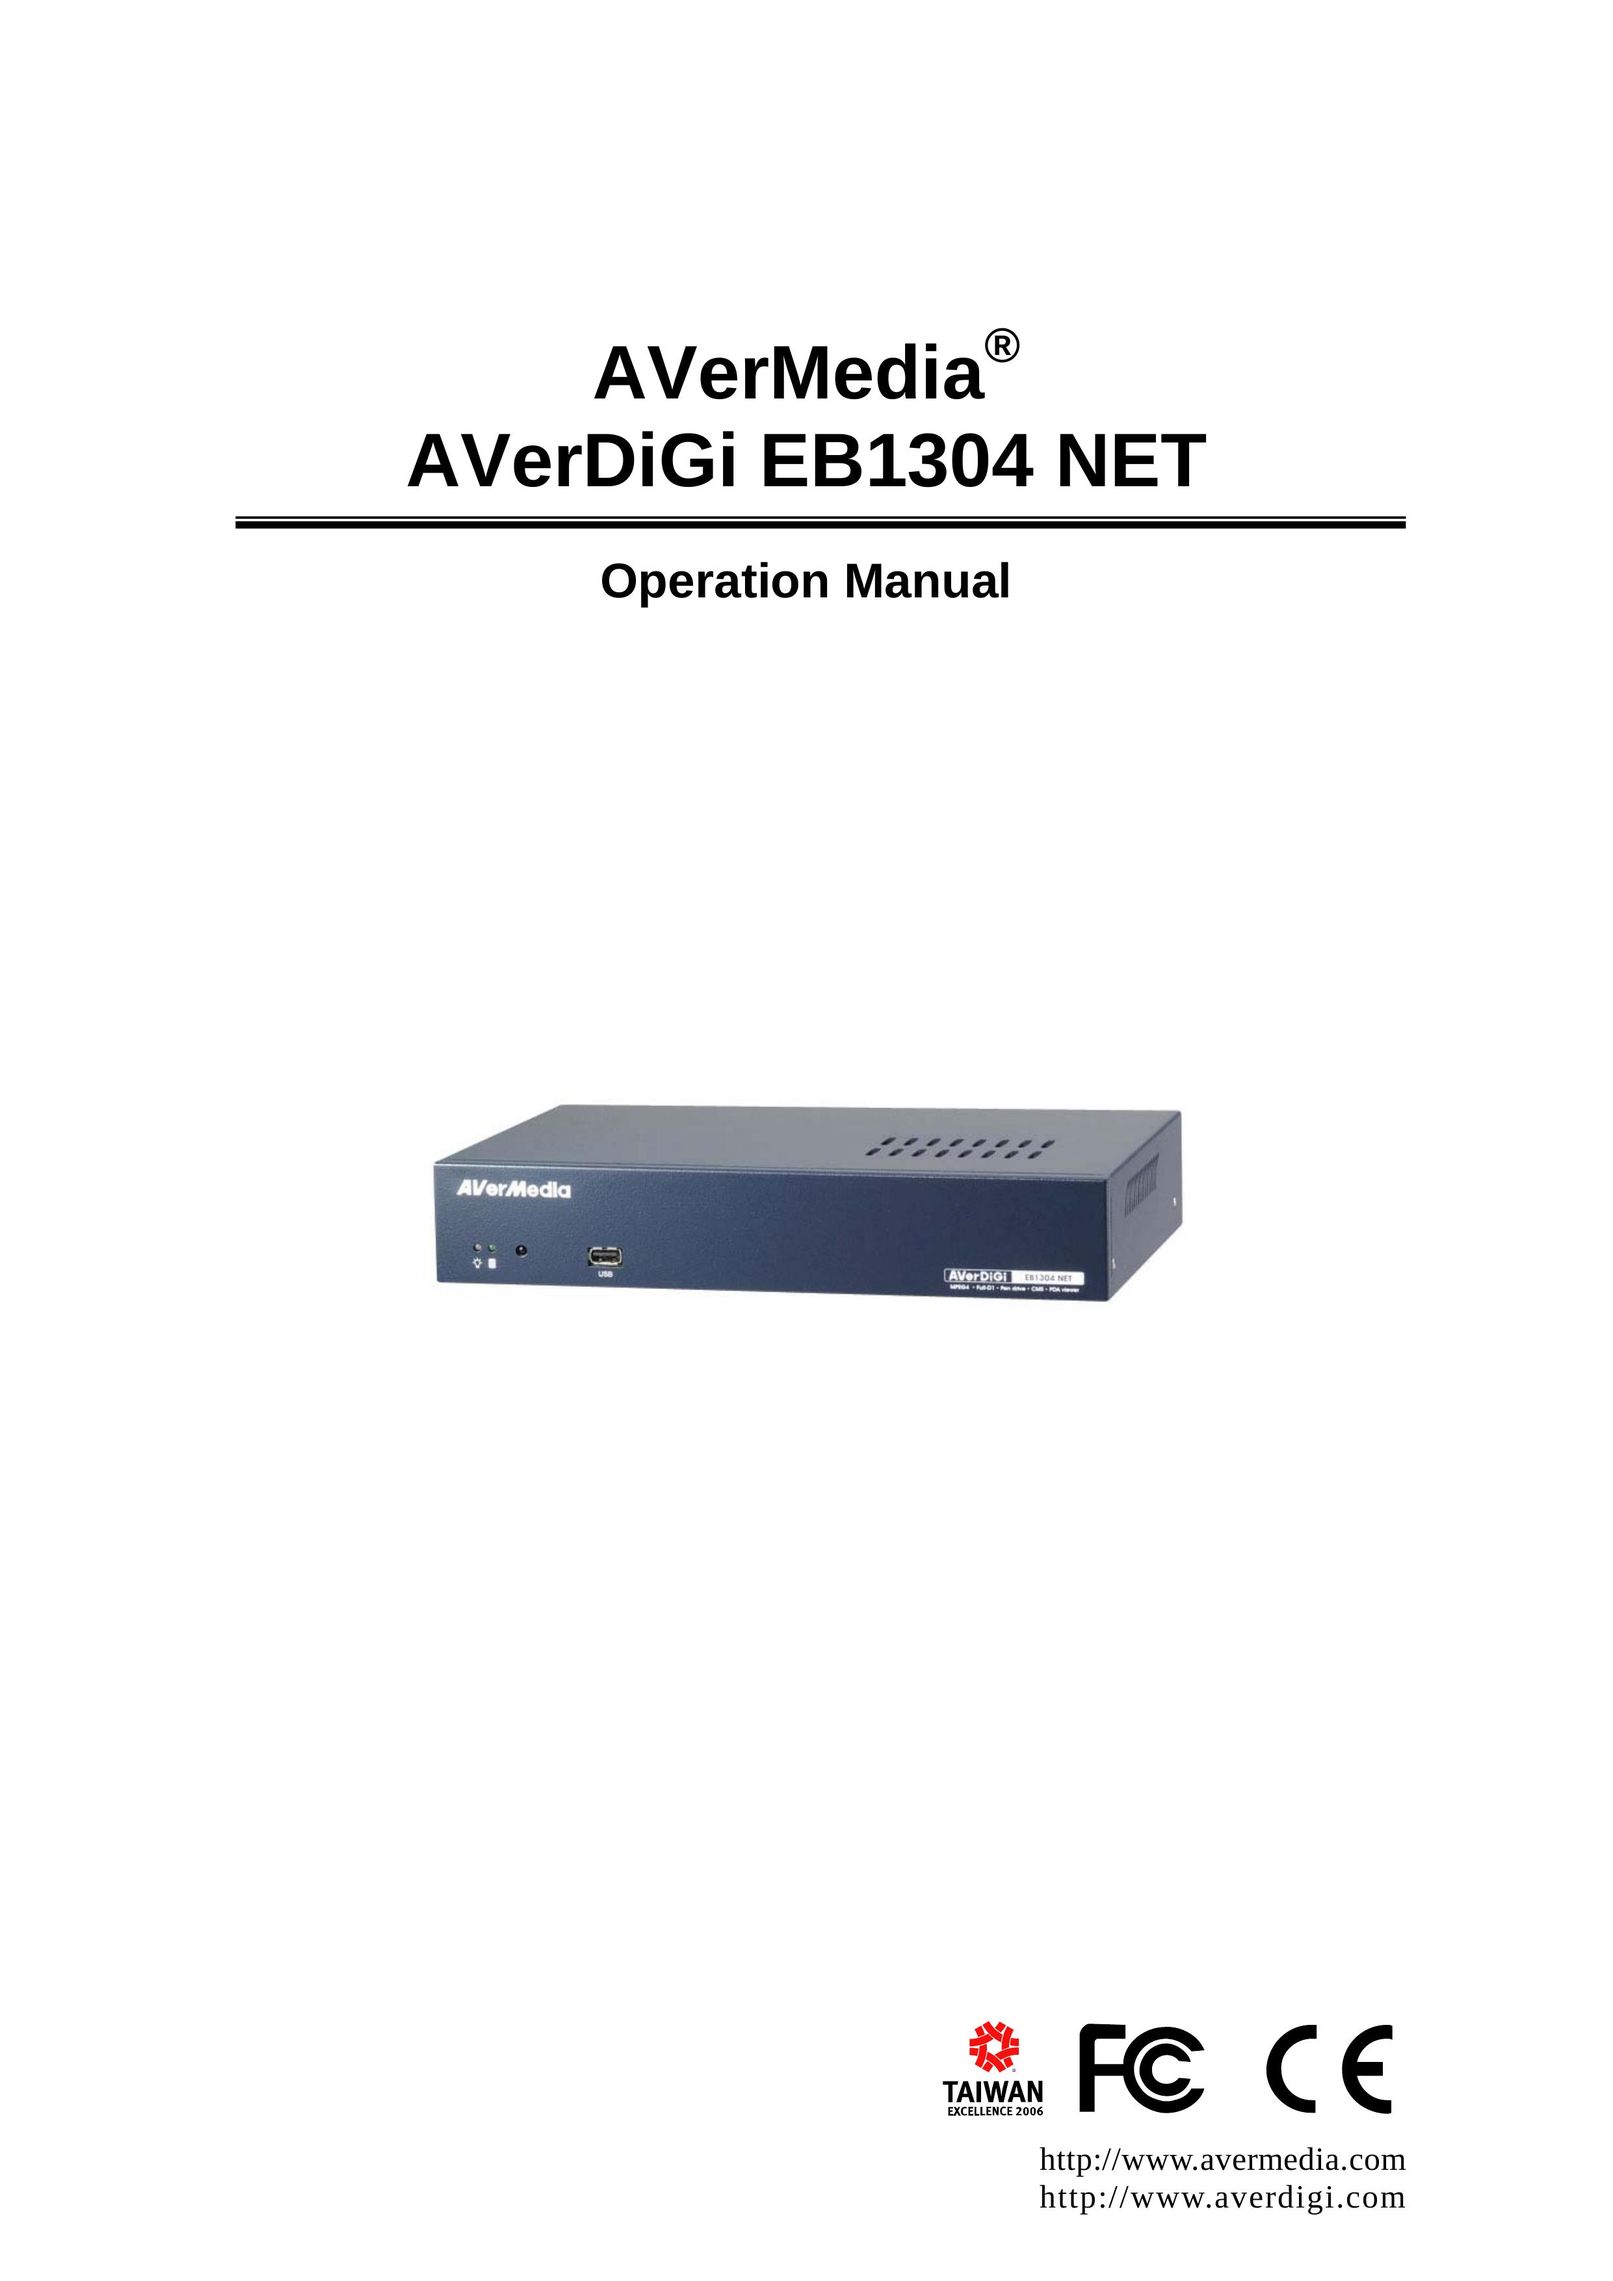 AVerMedia Technologies EB1304 NET DVR User Manual